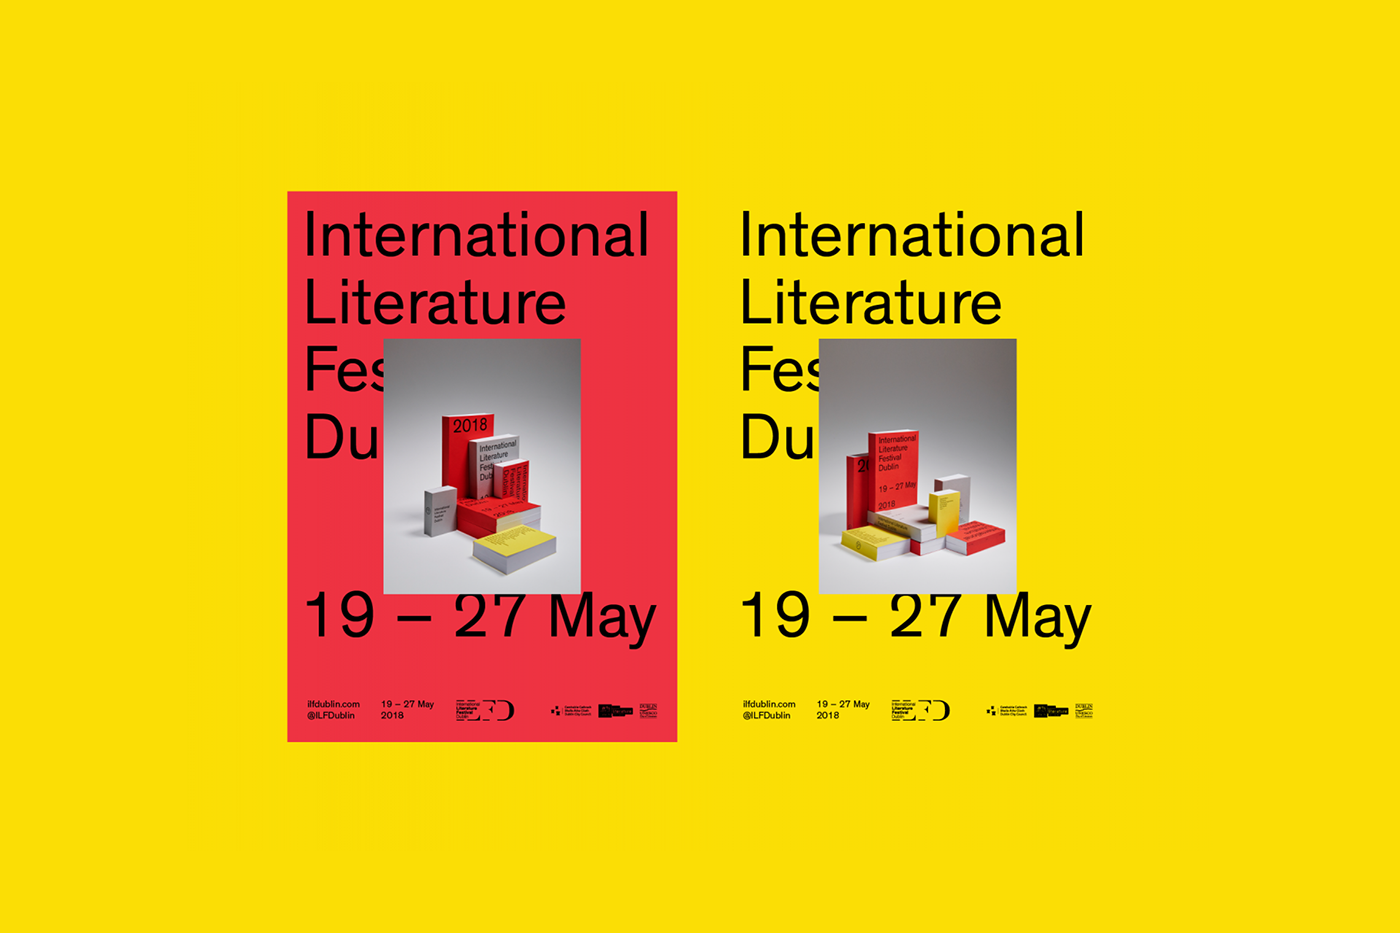 book literature books festival dublin branding  print design  Ireland editorial poster